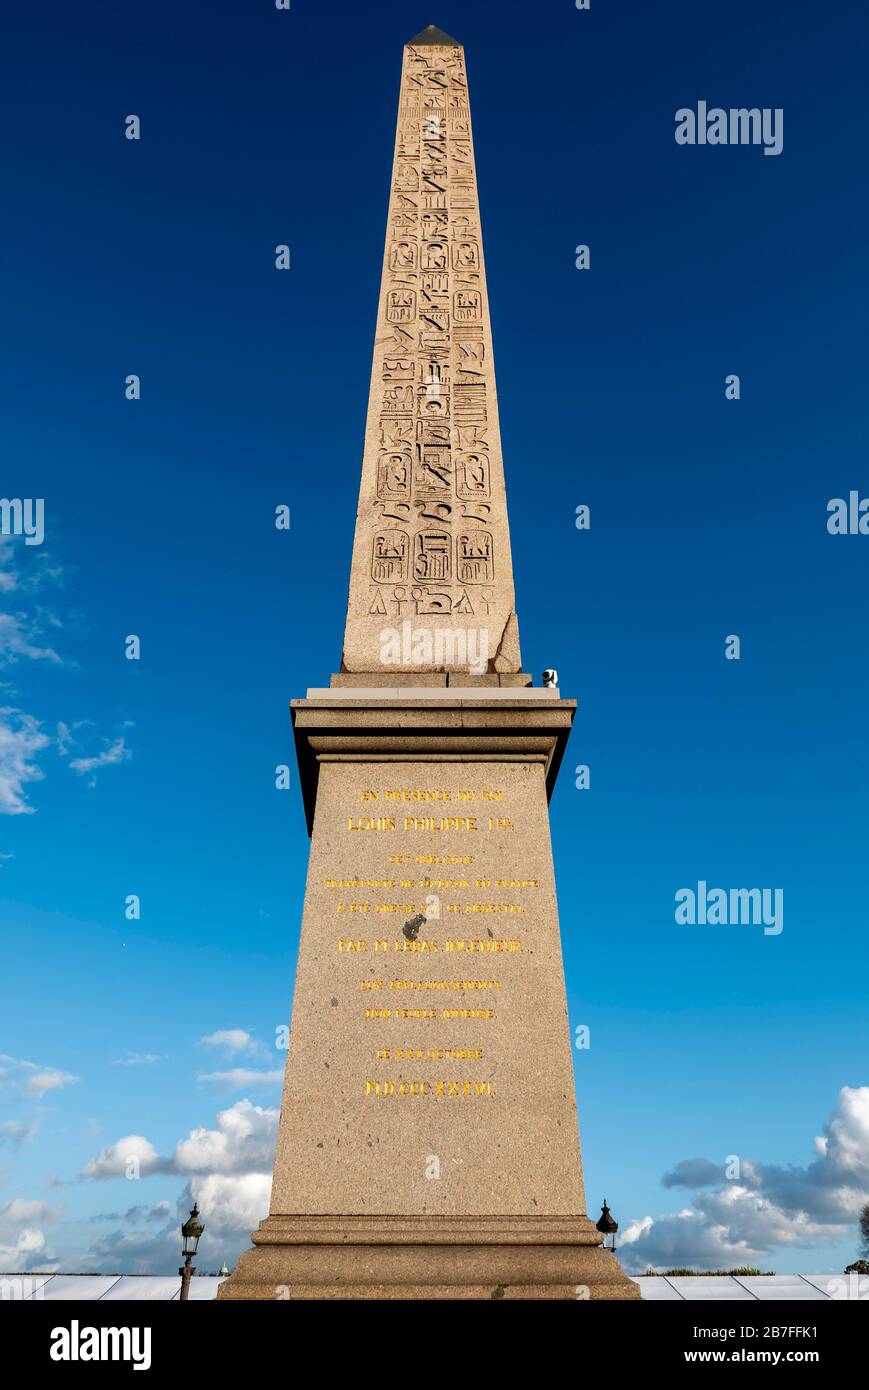 Der altägyptische Obelisk Luxor Obelisk an der Place de la Concorde, Paris, Frankreich, Europa Stockfoto